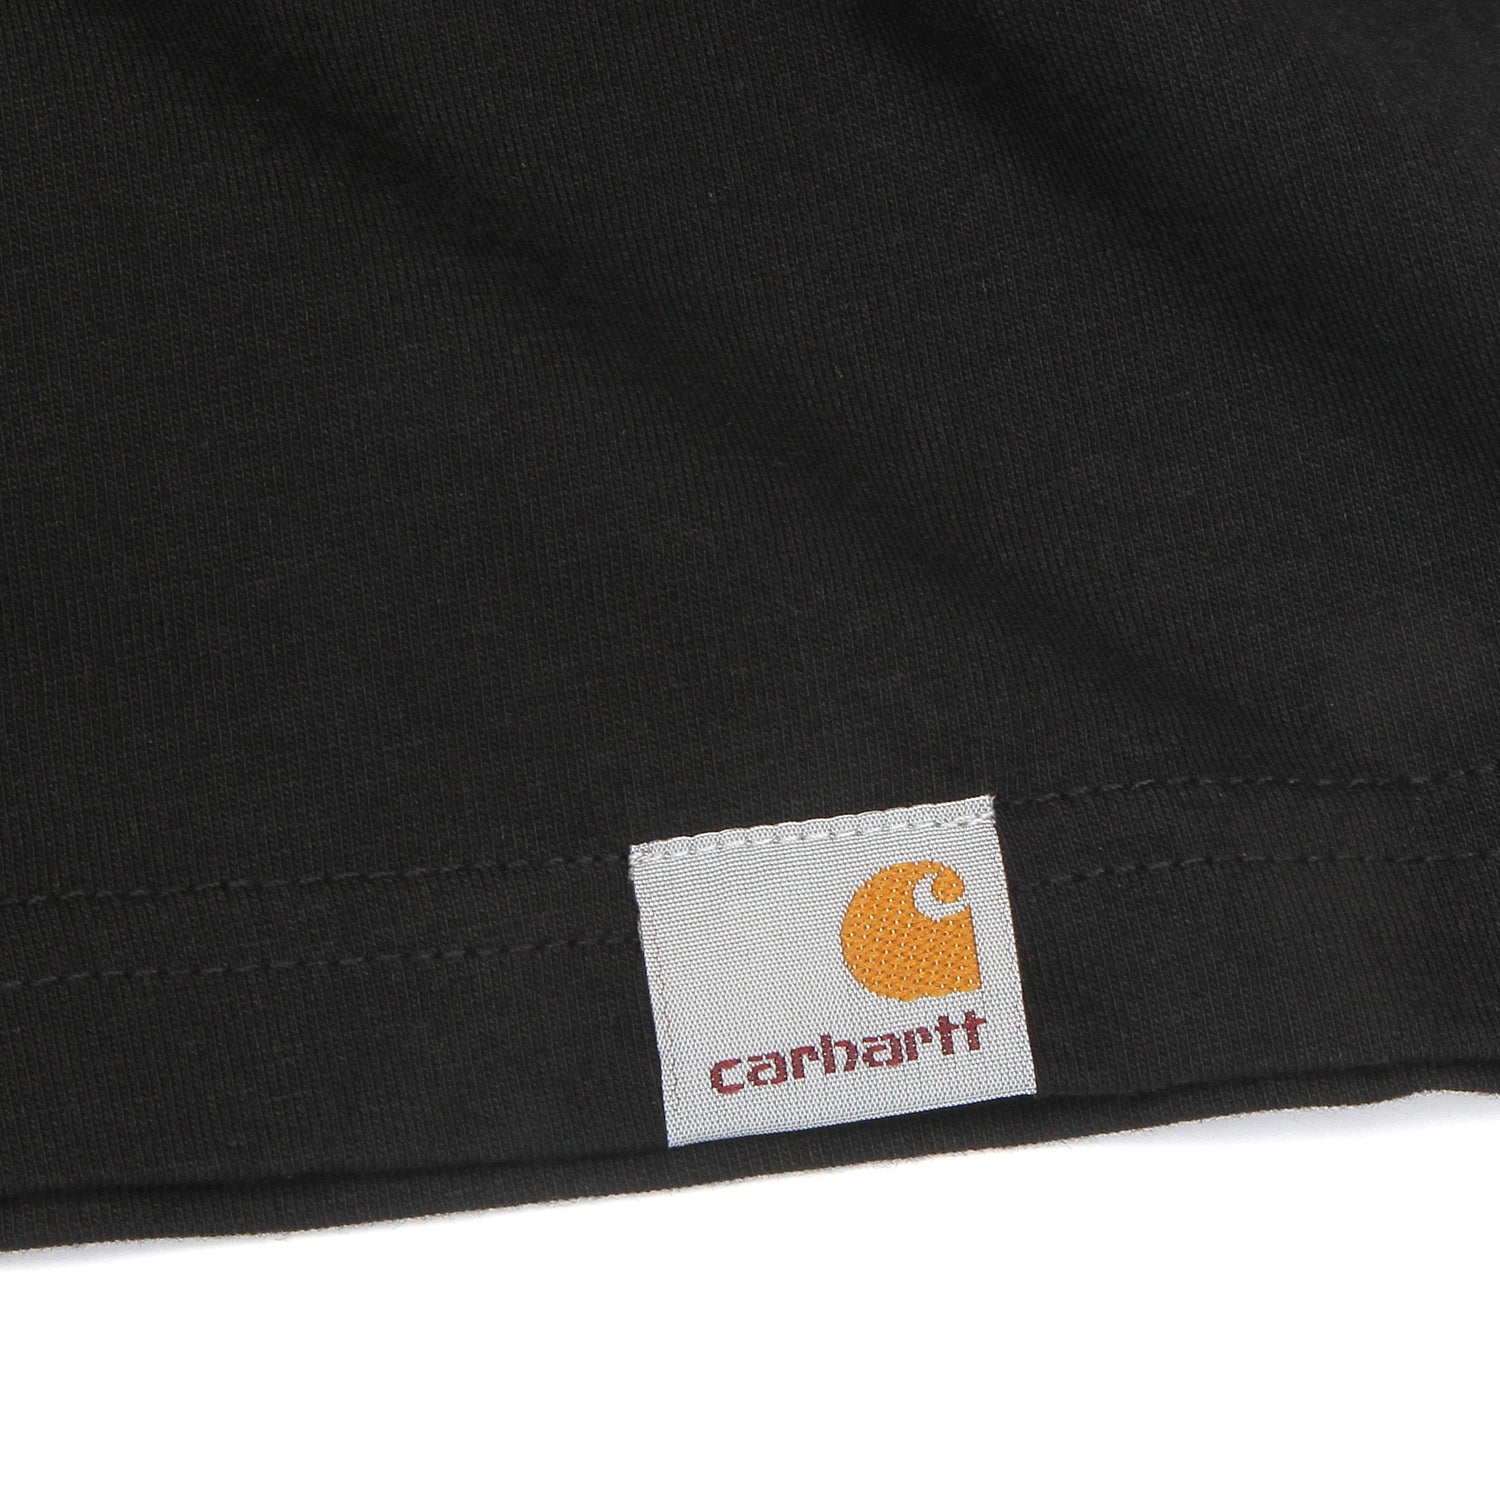 Carhartt WIP x Premier T-Shirt